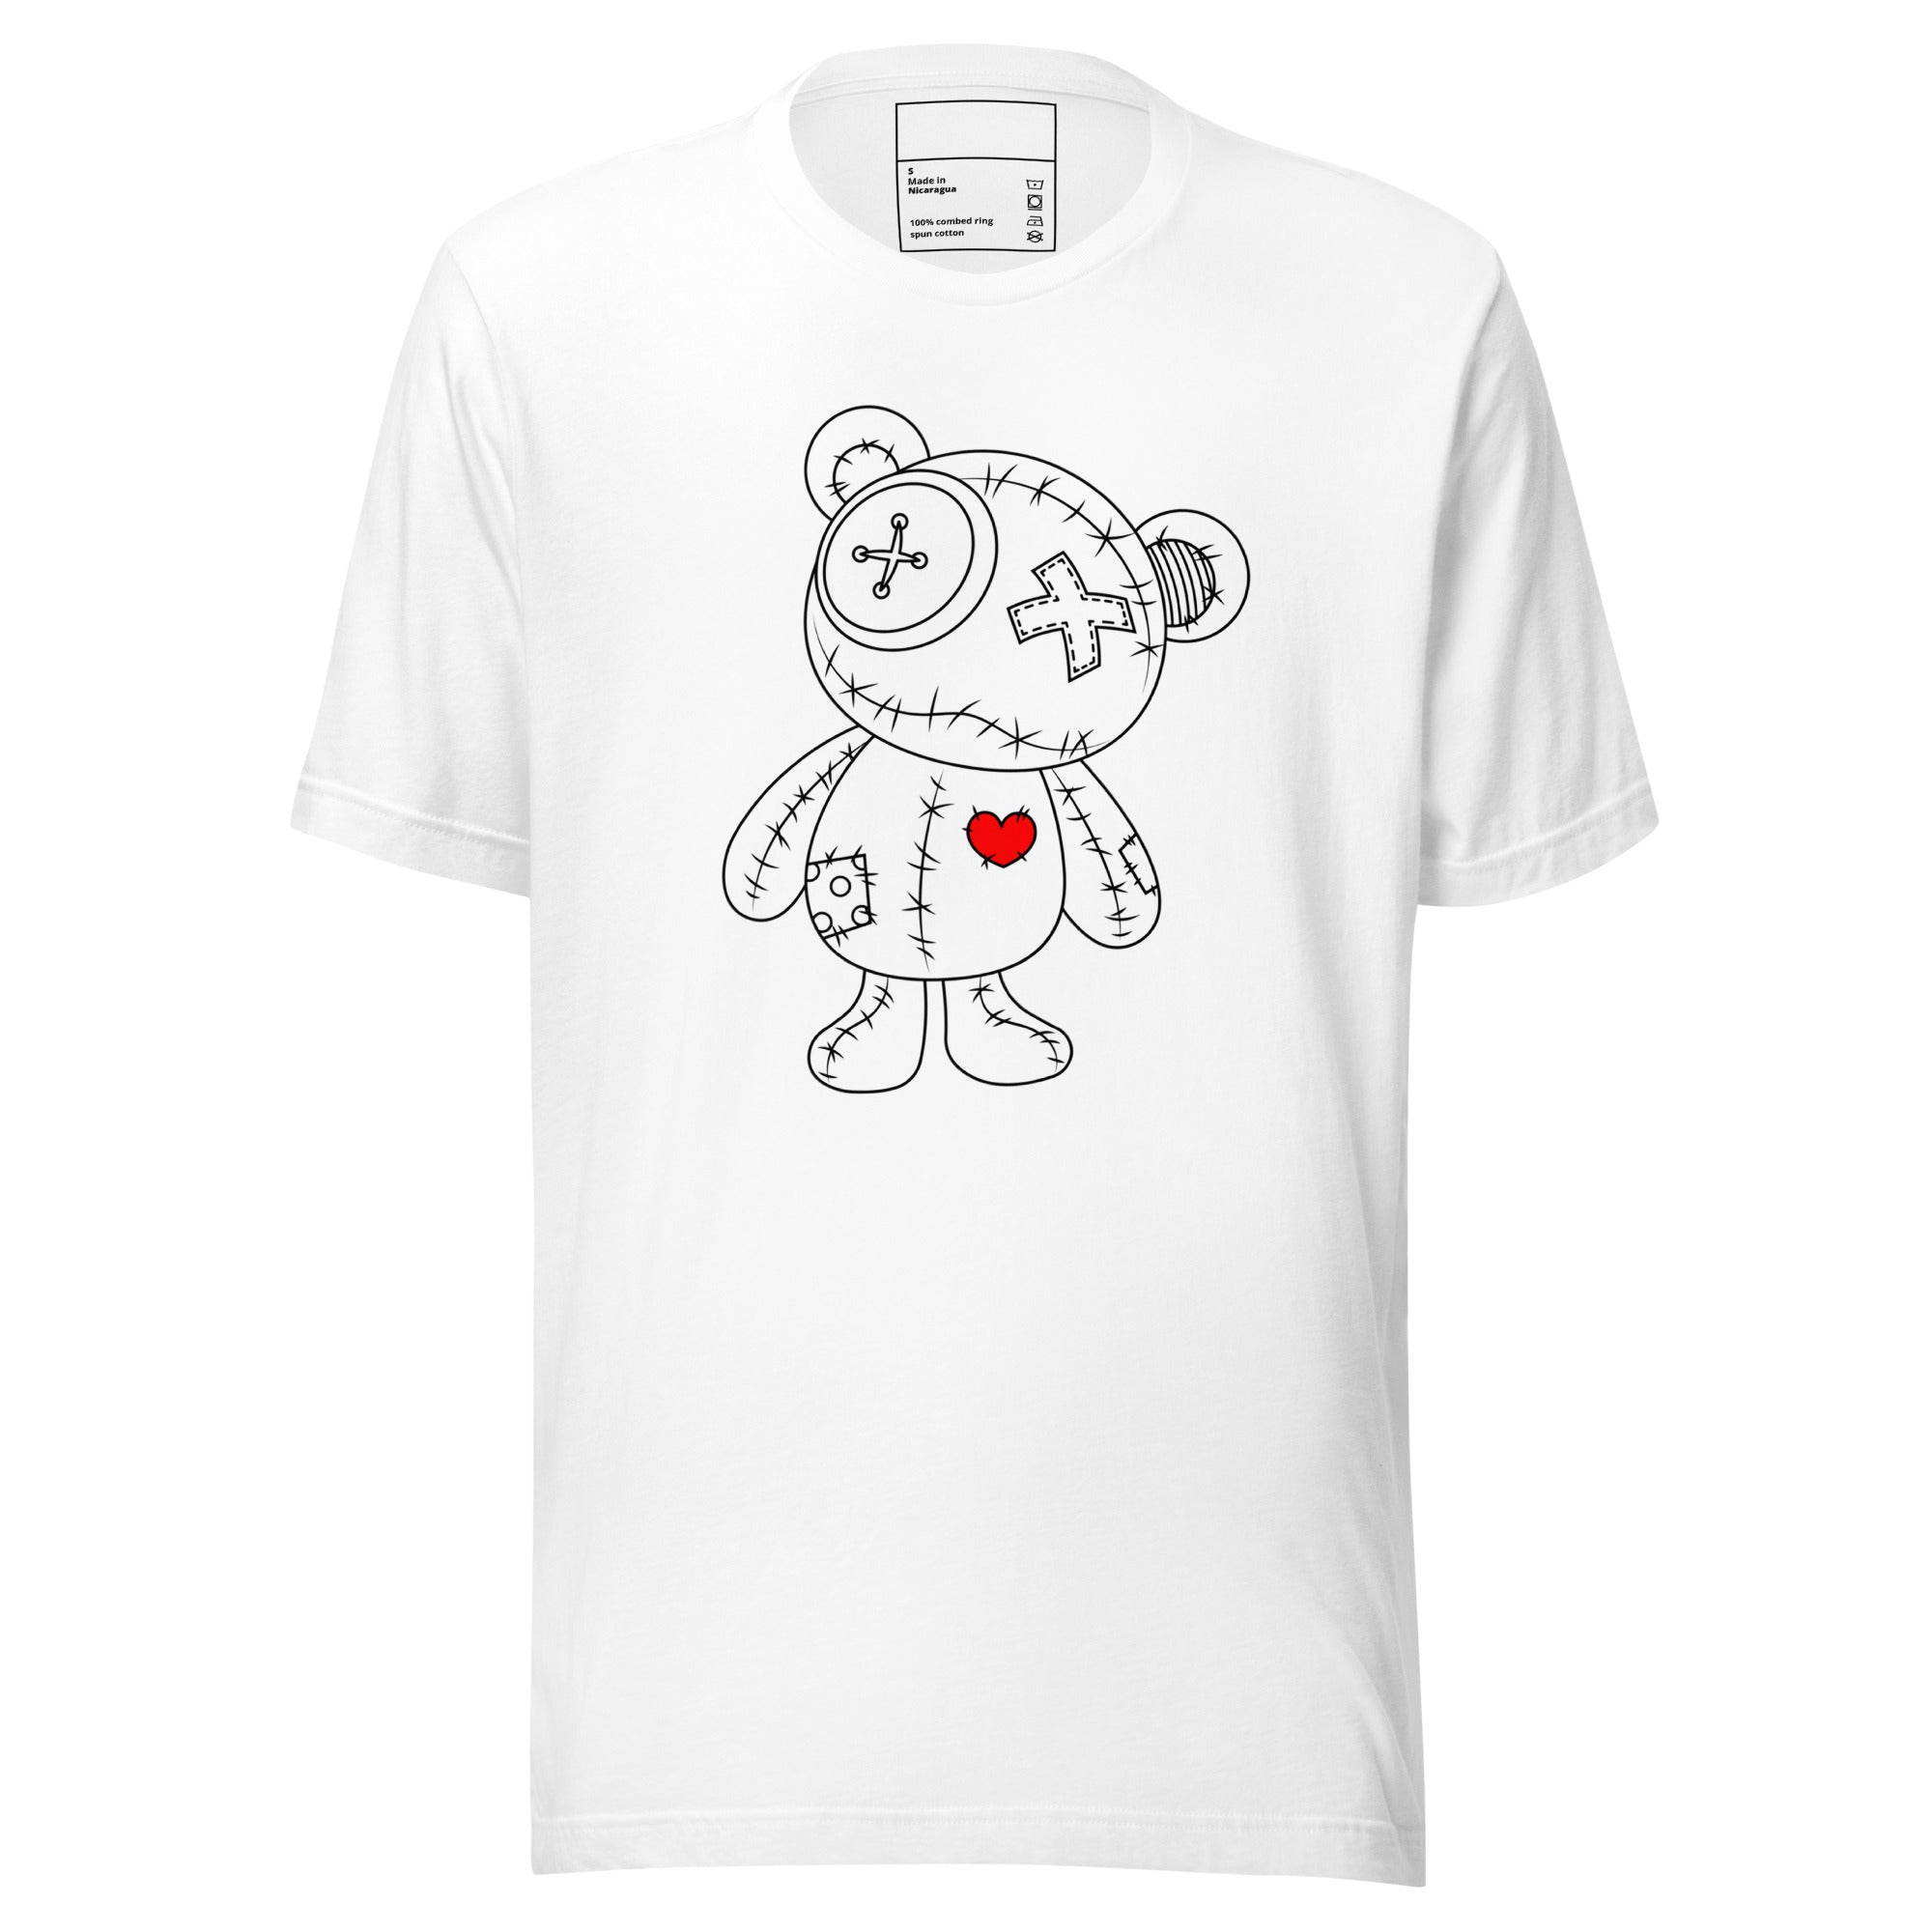 love bear shirt a bear with a read heart. color white